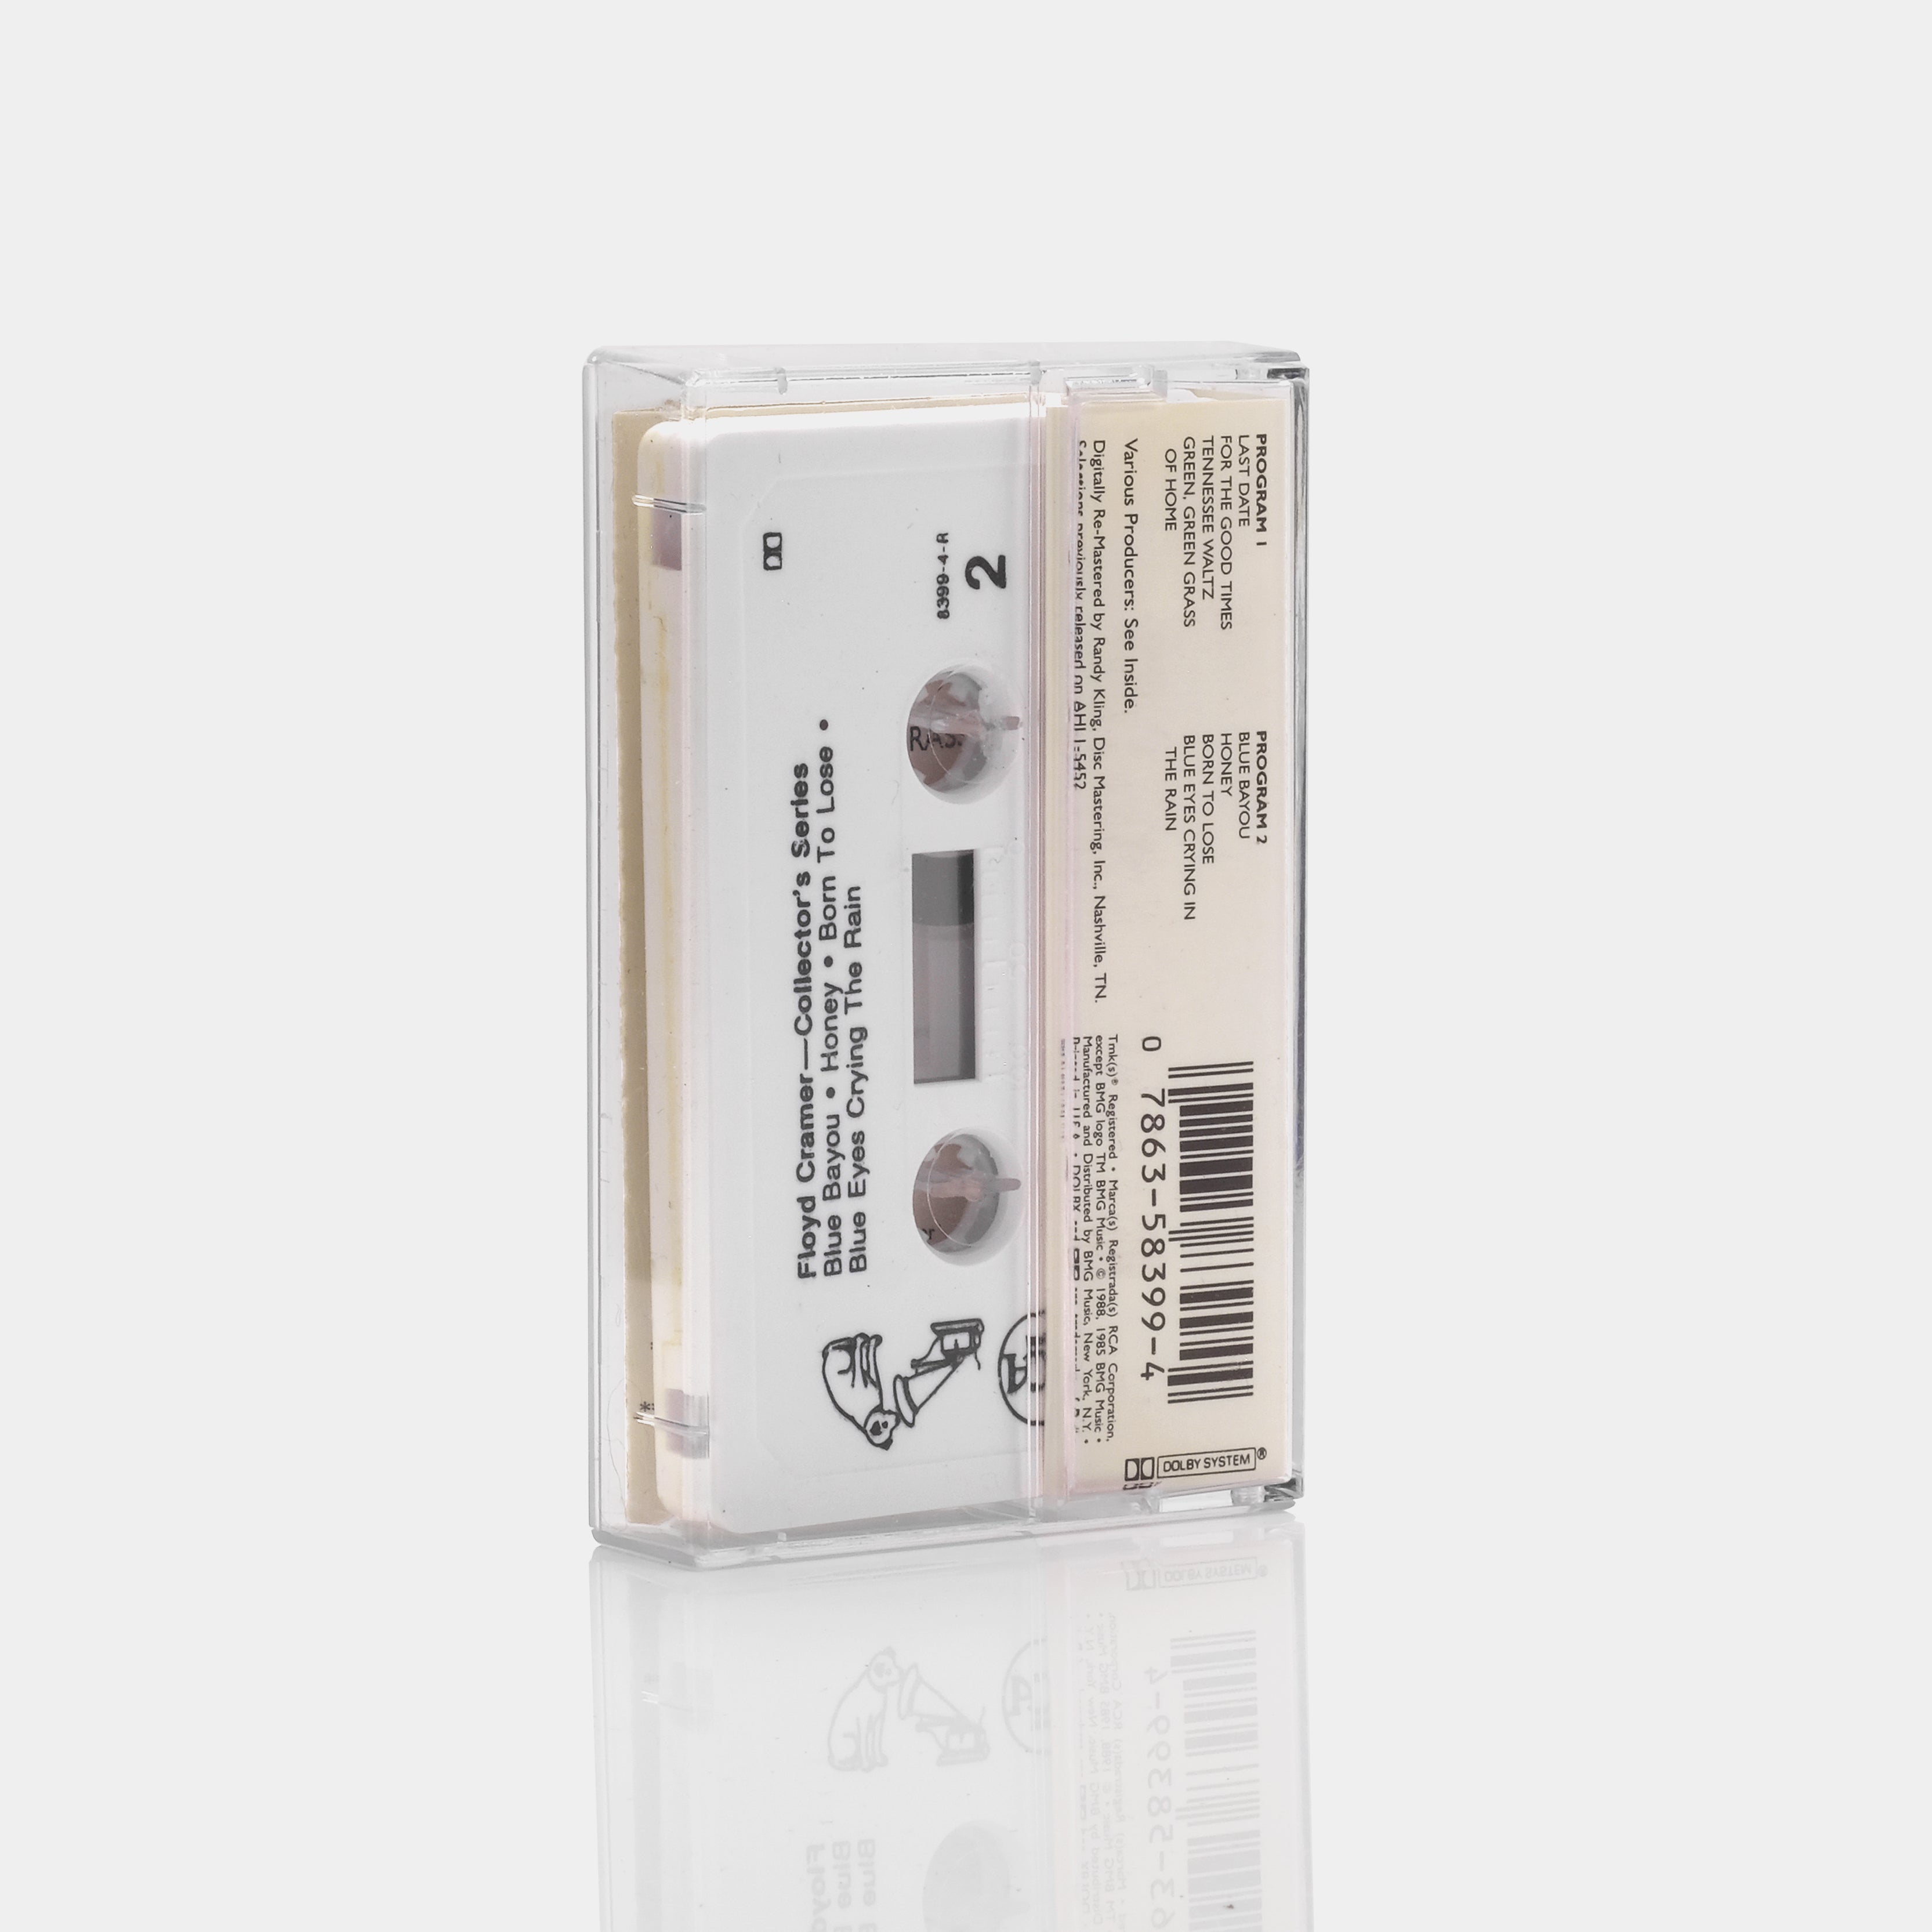 Floyd Cramer - Collector's Series Cassette Tape